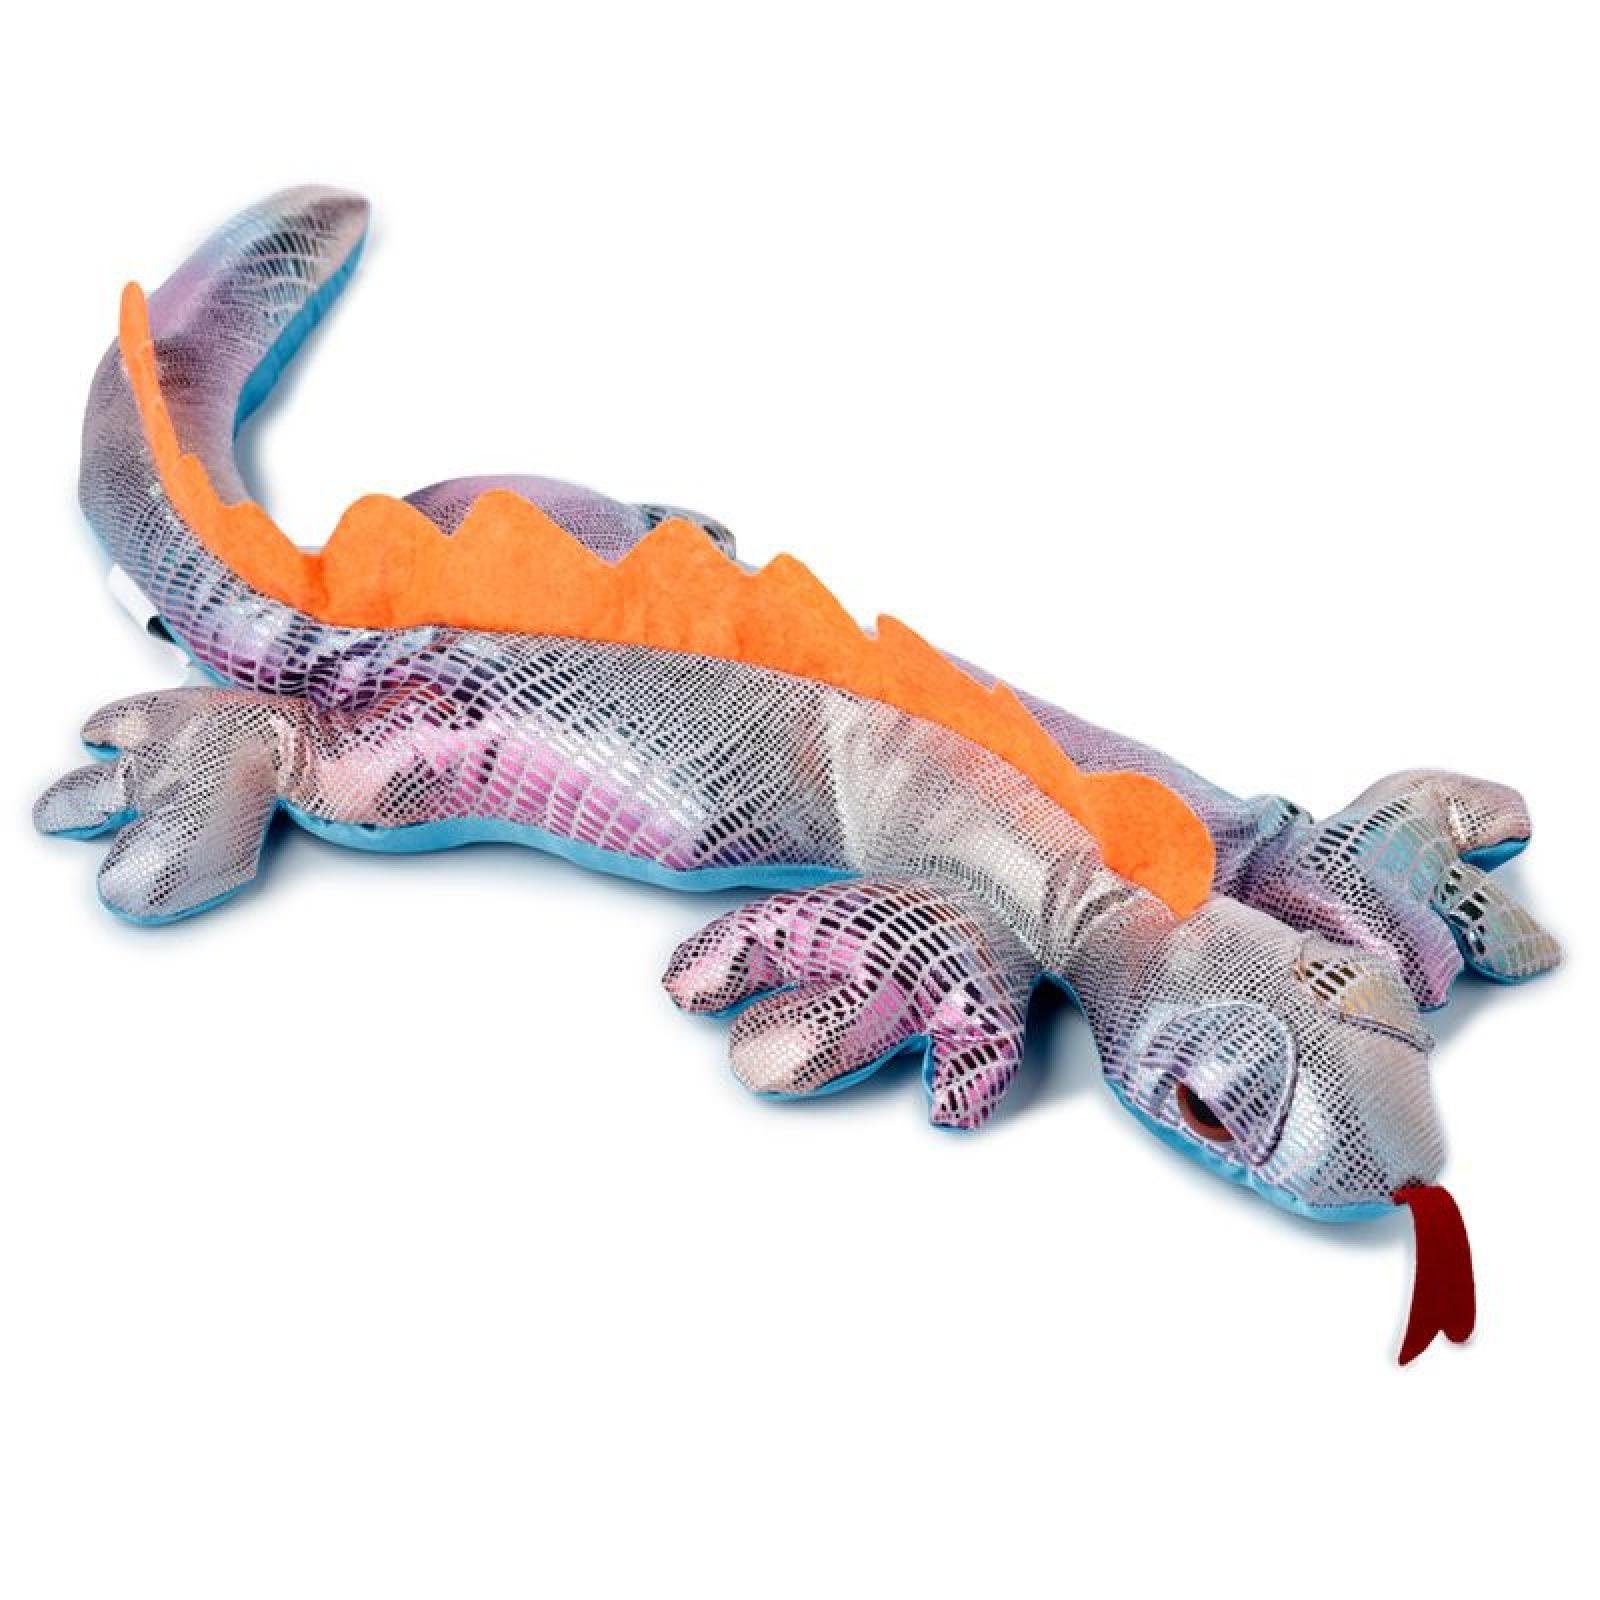 Salamander, Puckator Sandgefüllter Groß Tierfigur